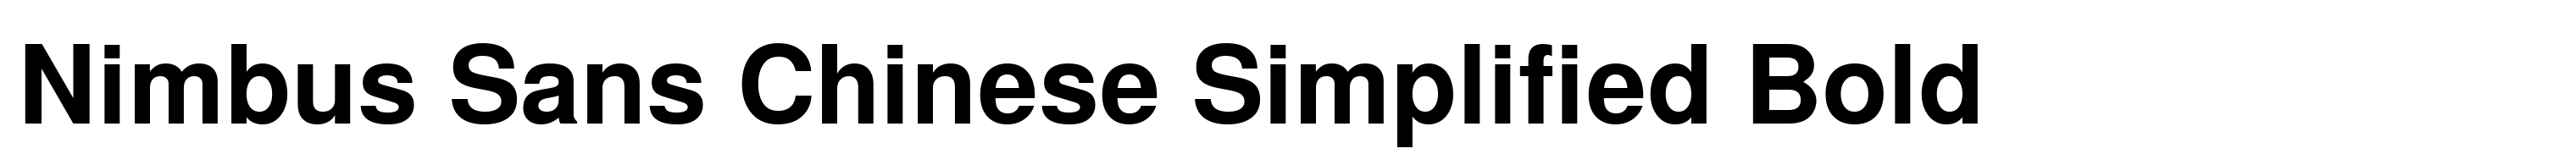 Nimbus Sans Chinese Simplified Bold